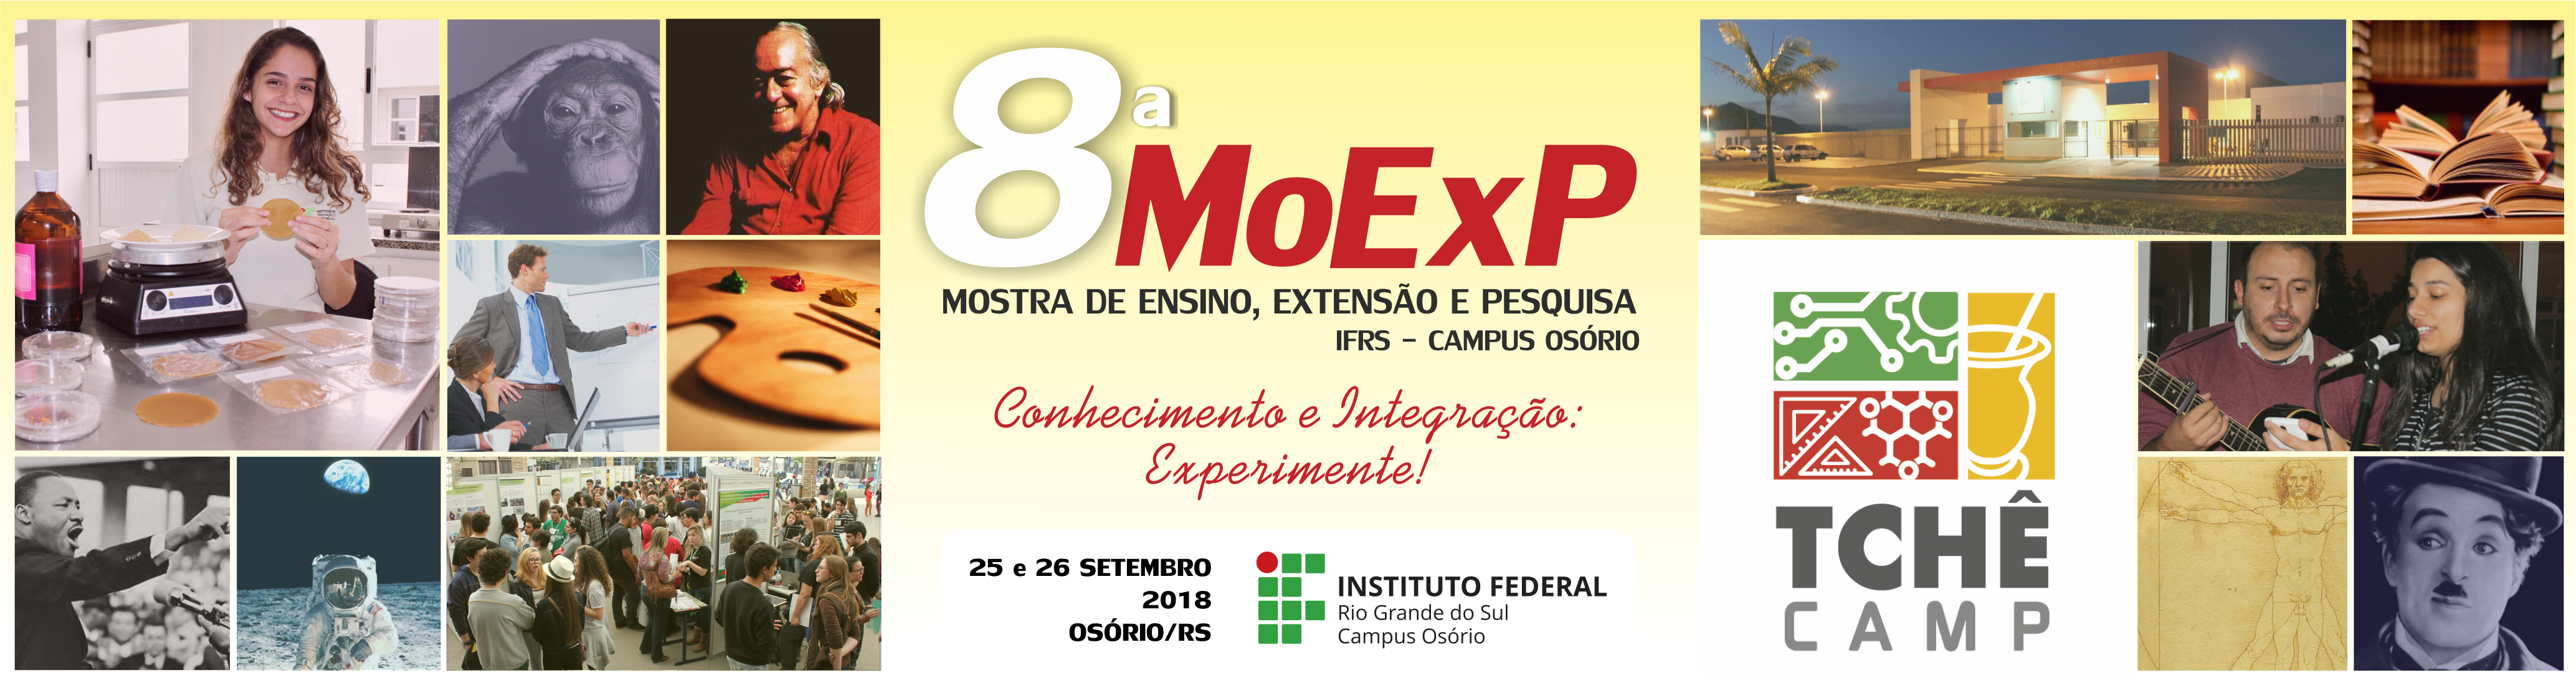 Logo8moexp